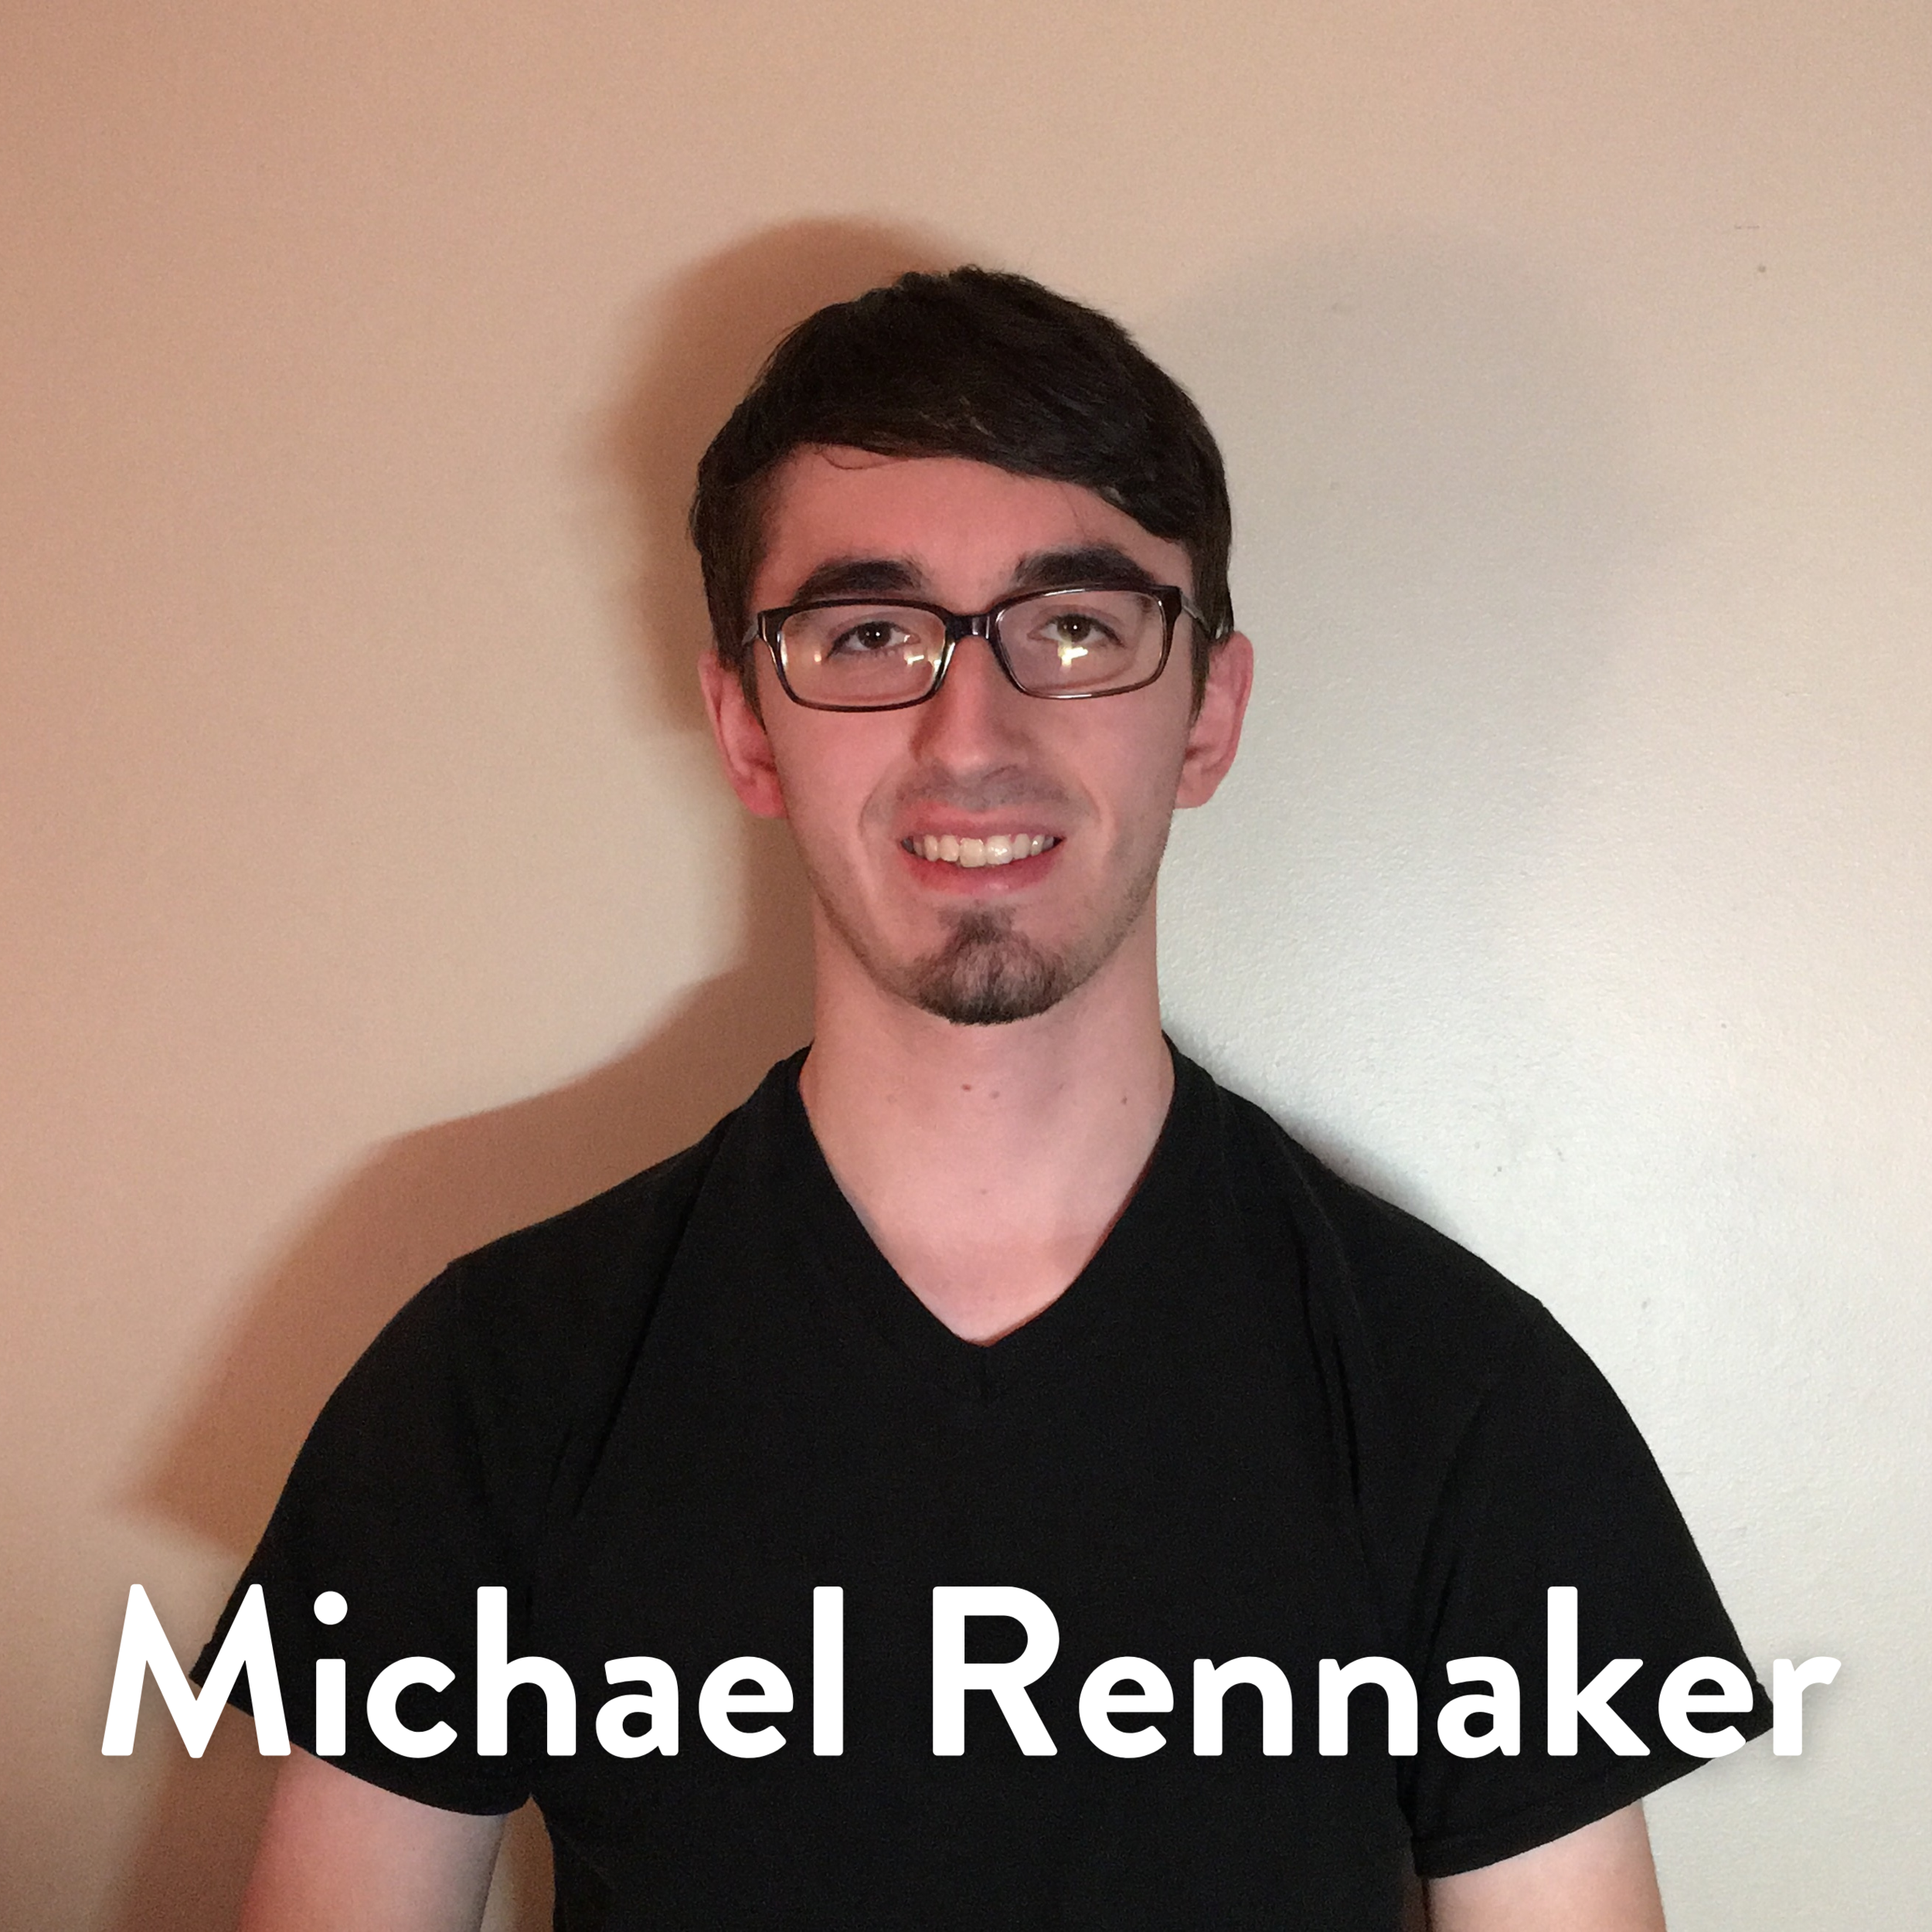 Michael Rennaker WEB.png